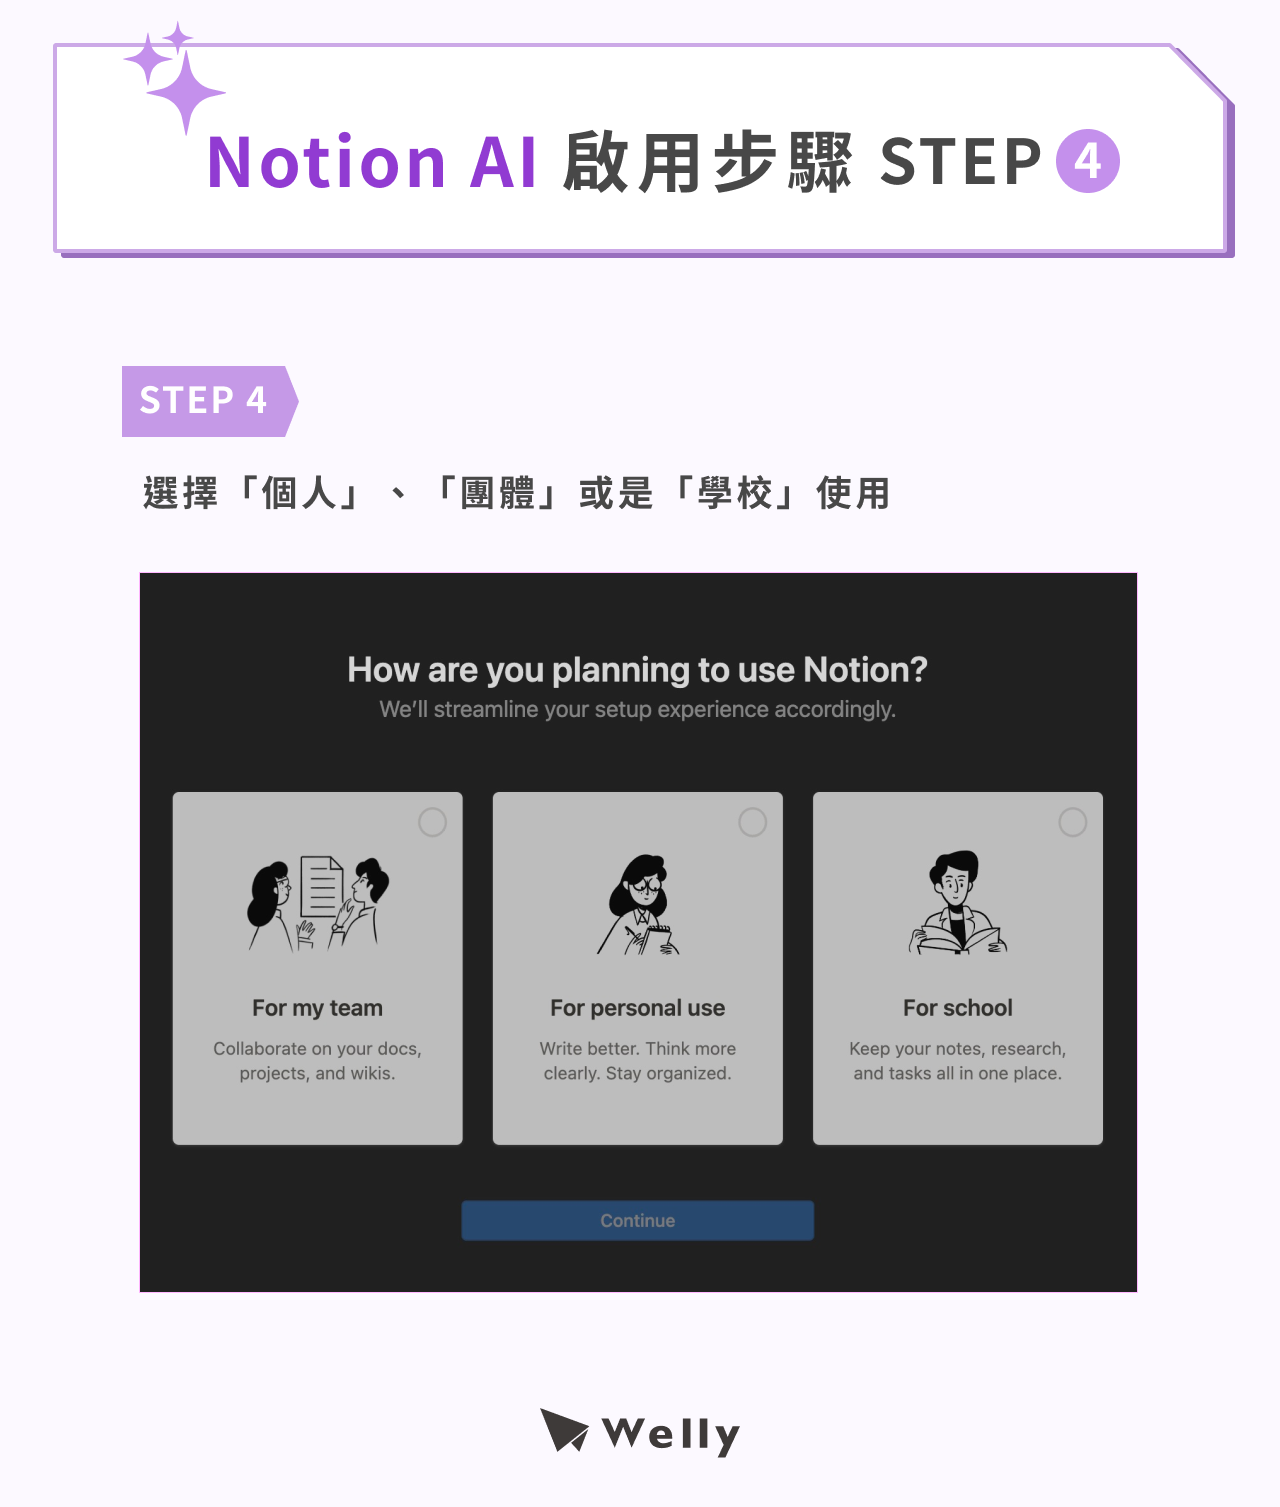 Notion AI 啟用步驟 - STEP 5